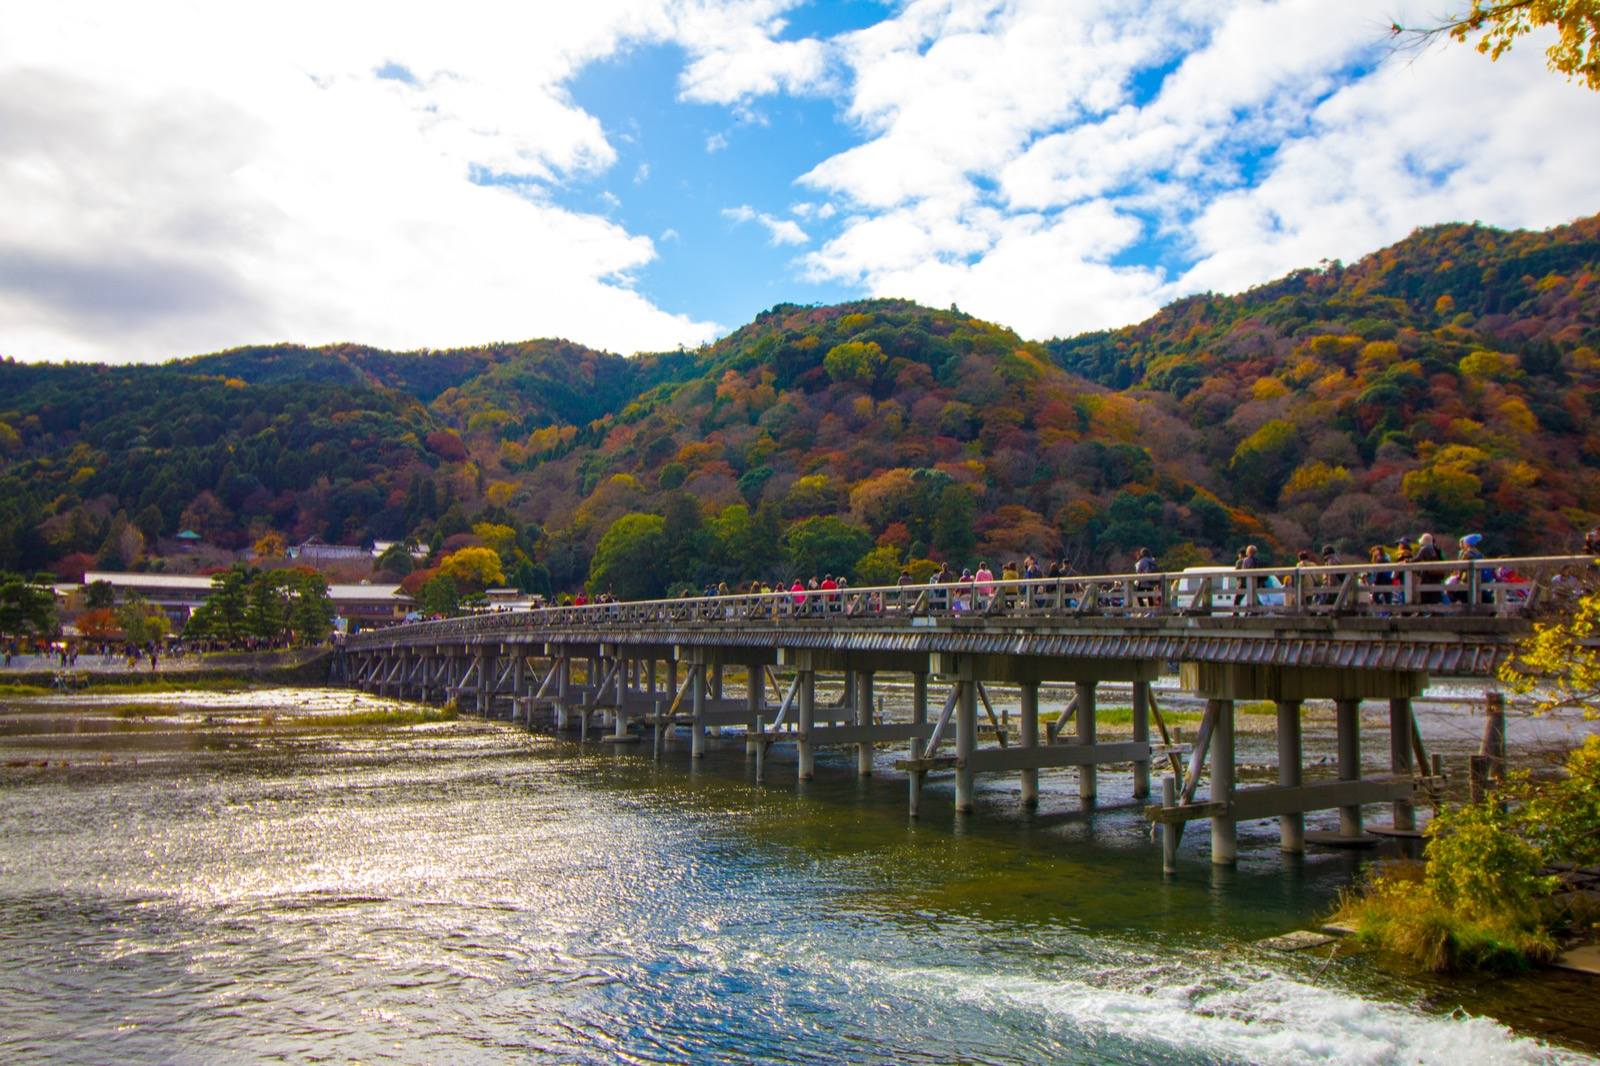 Photo of Arashiyama, Japan (IMG_5604 by y.ganden)